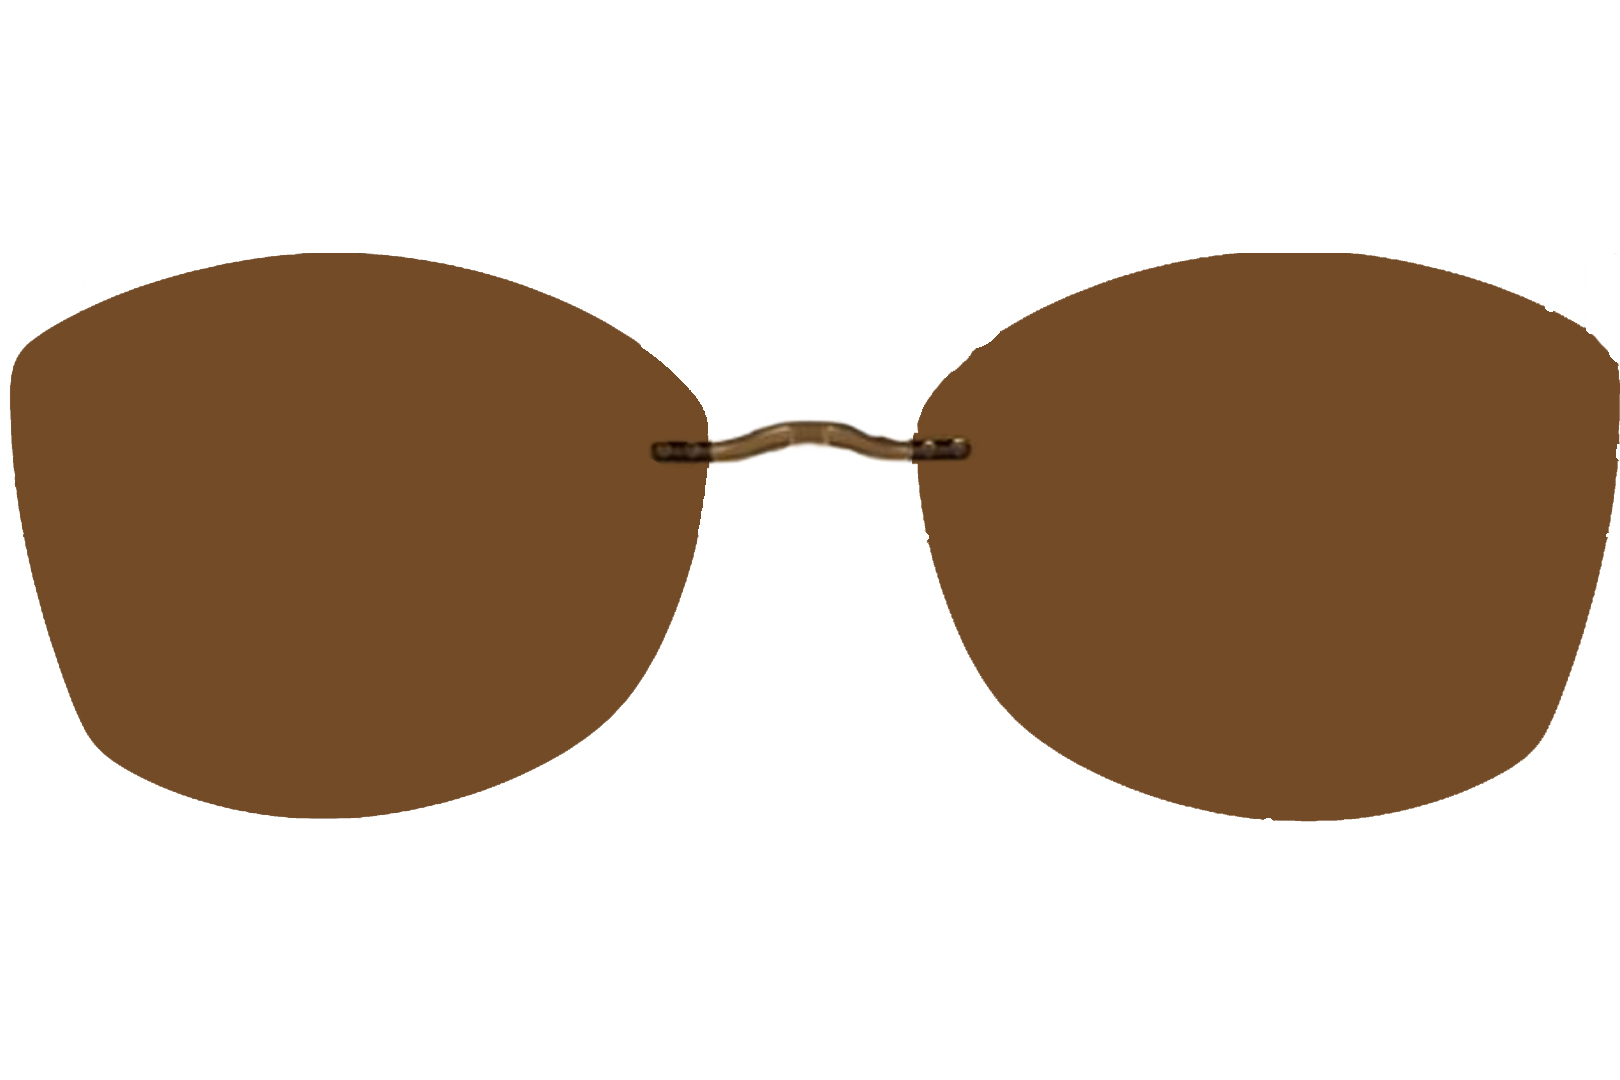 Discover 233+ oval clip on sunglasses super hot